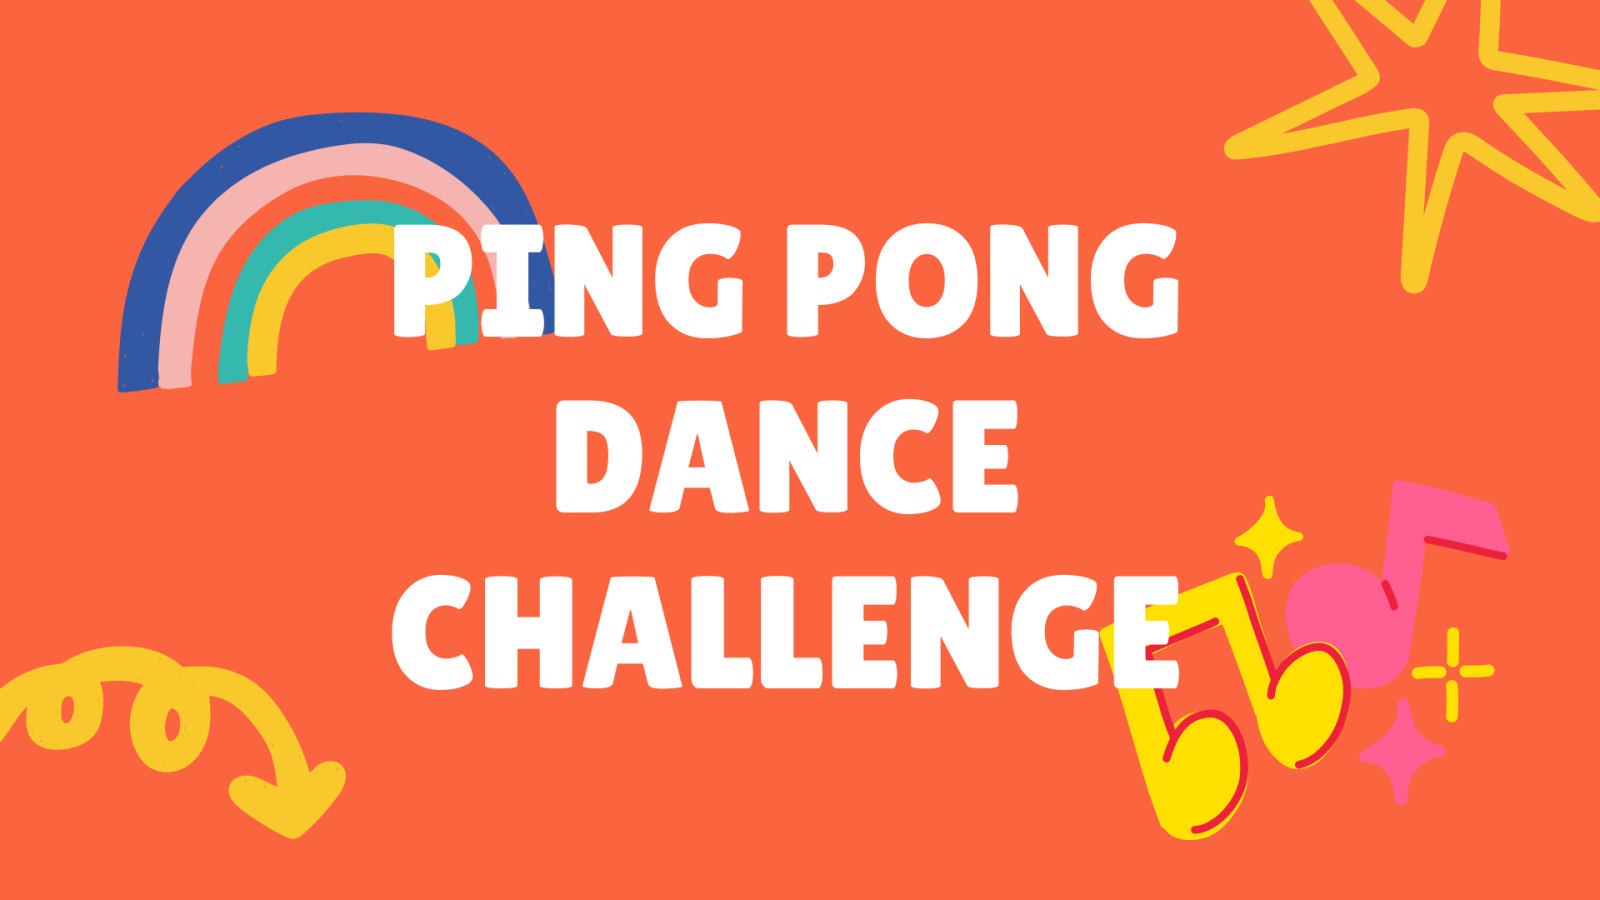 Ping Pong Dance Challenge